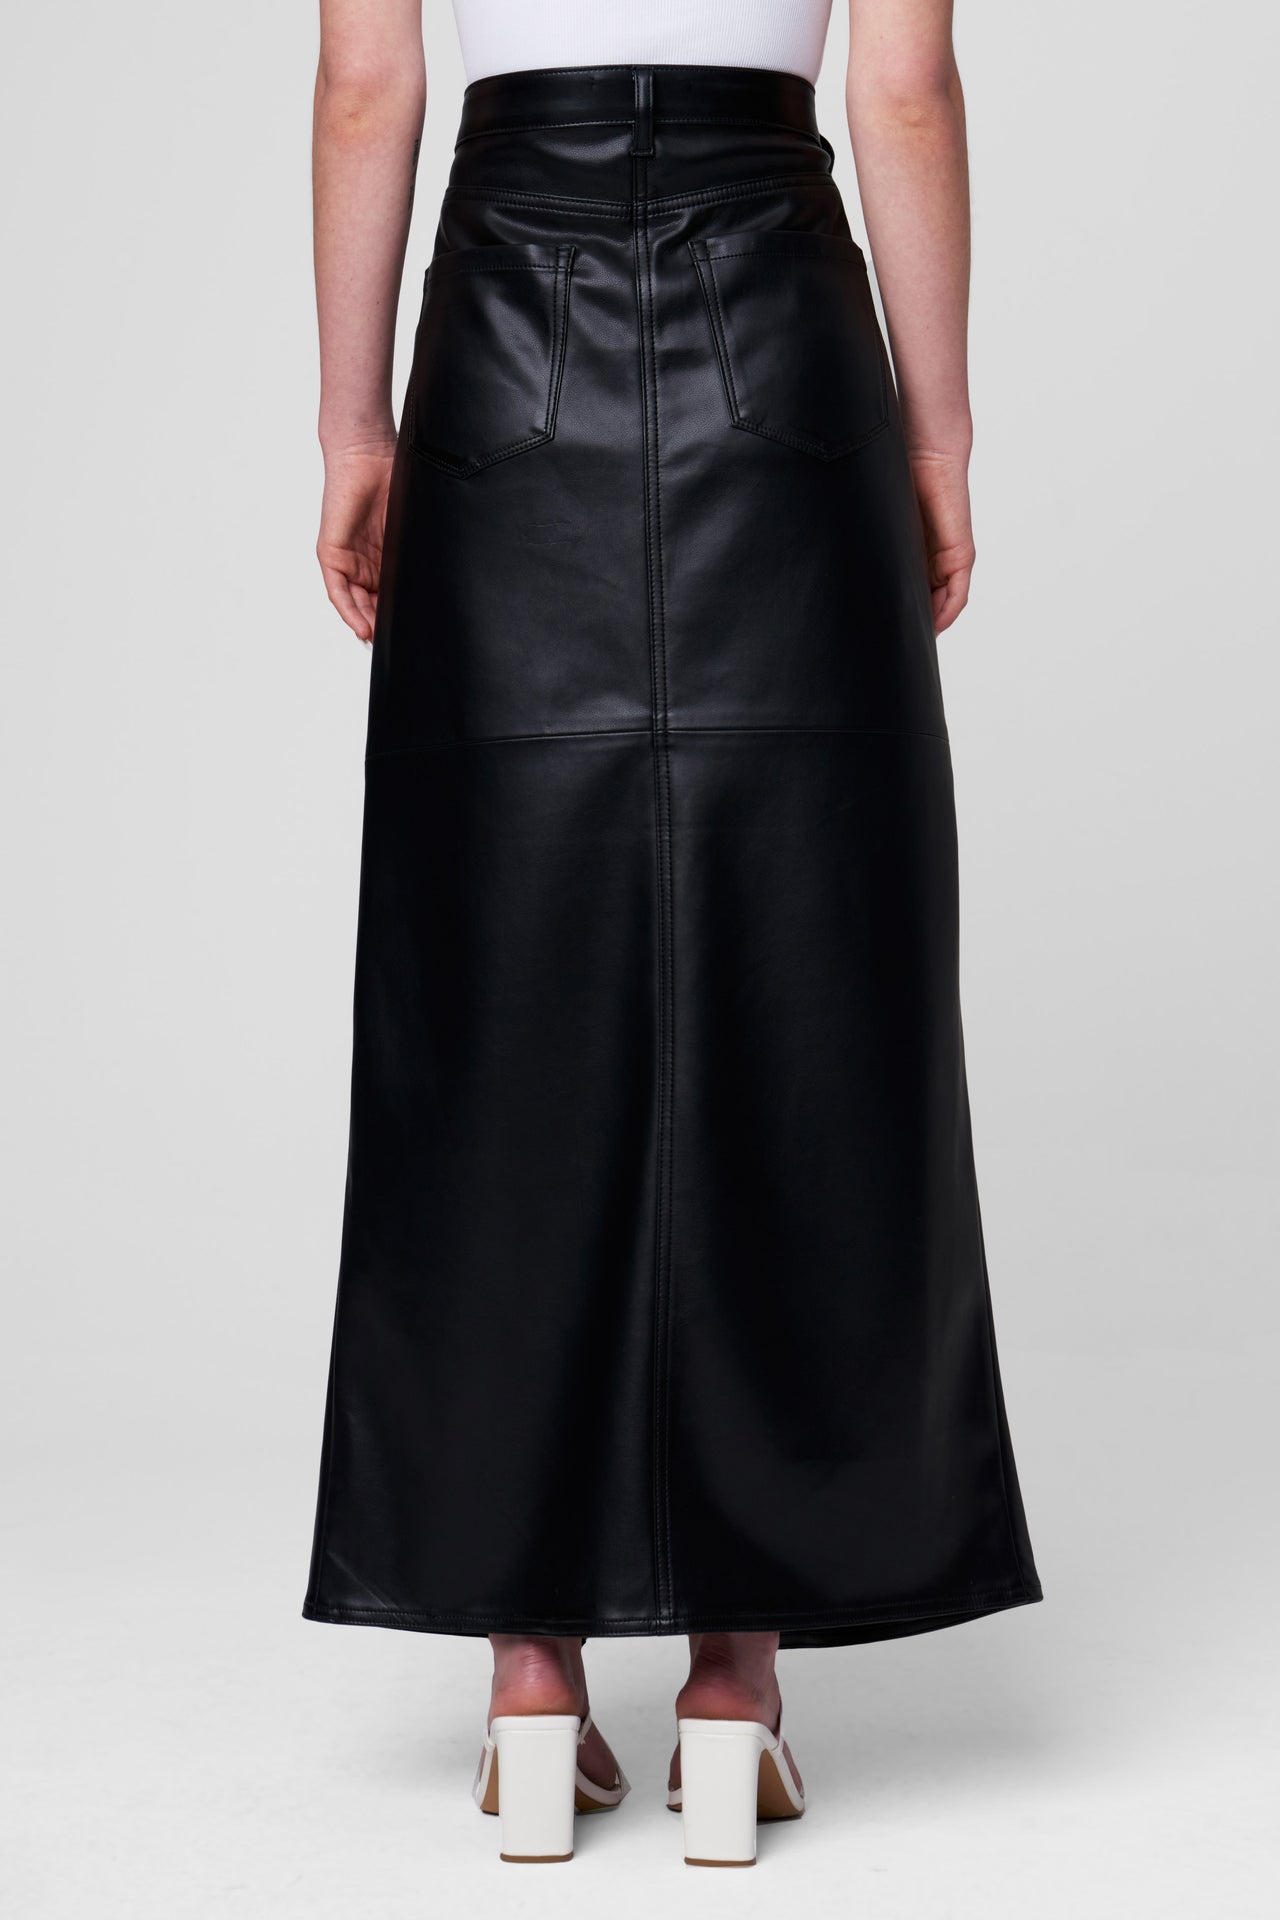 Night Talk Midi Skirt Black, Midi Skirt by Blank NYC | LIT Boutique